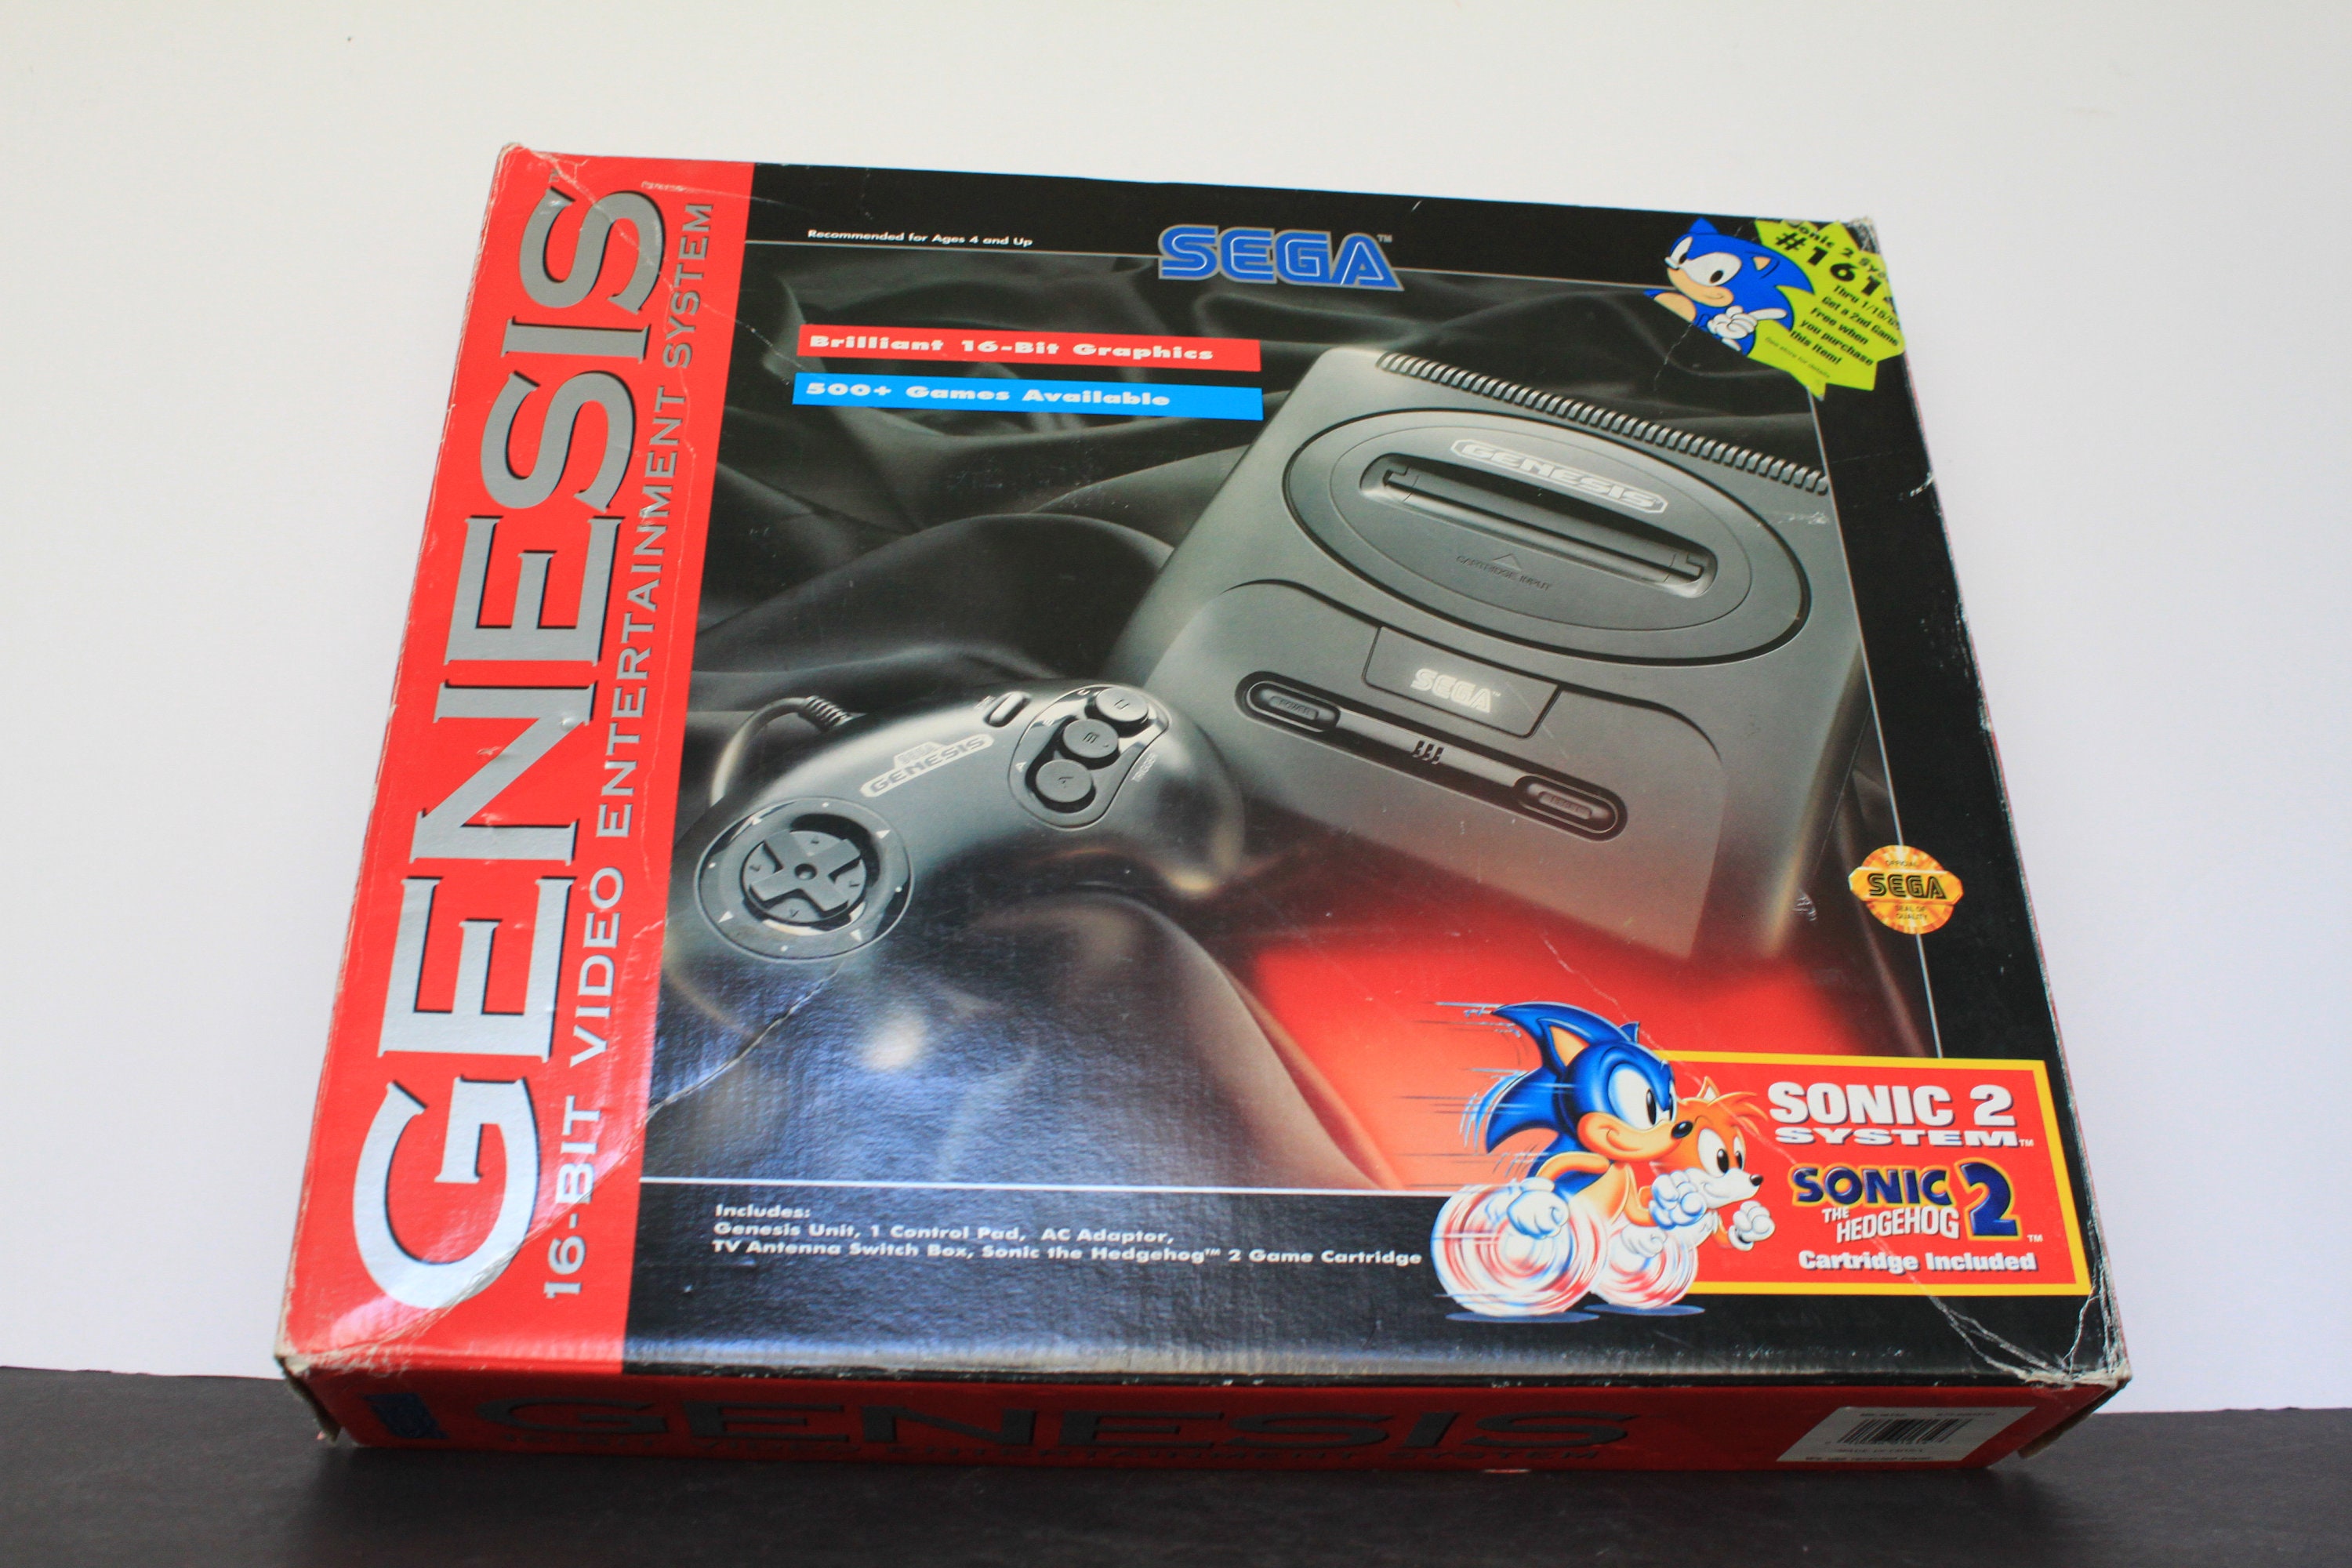 Australian Sega Mega Drive II Game System with Original Box